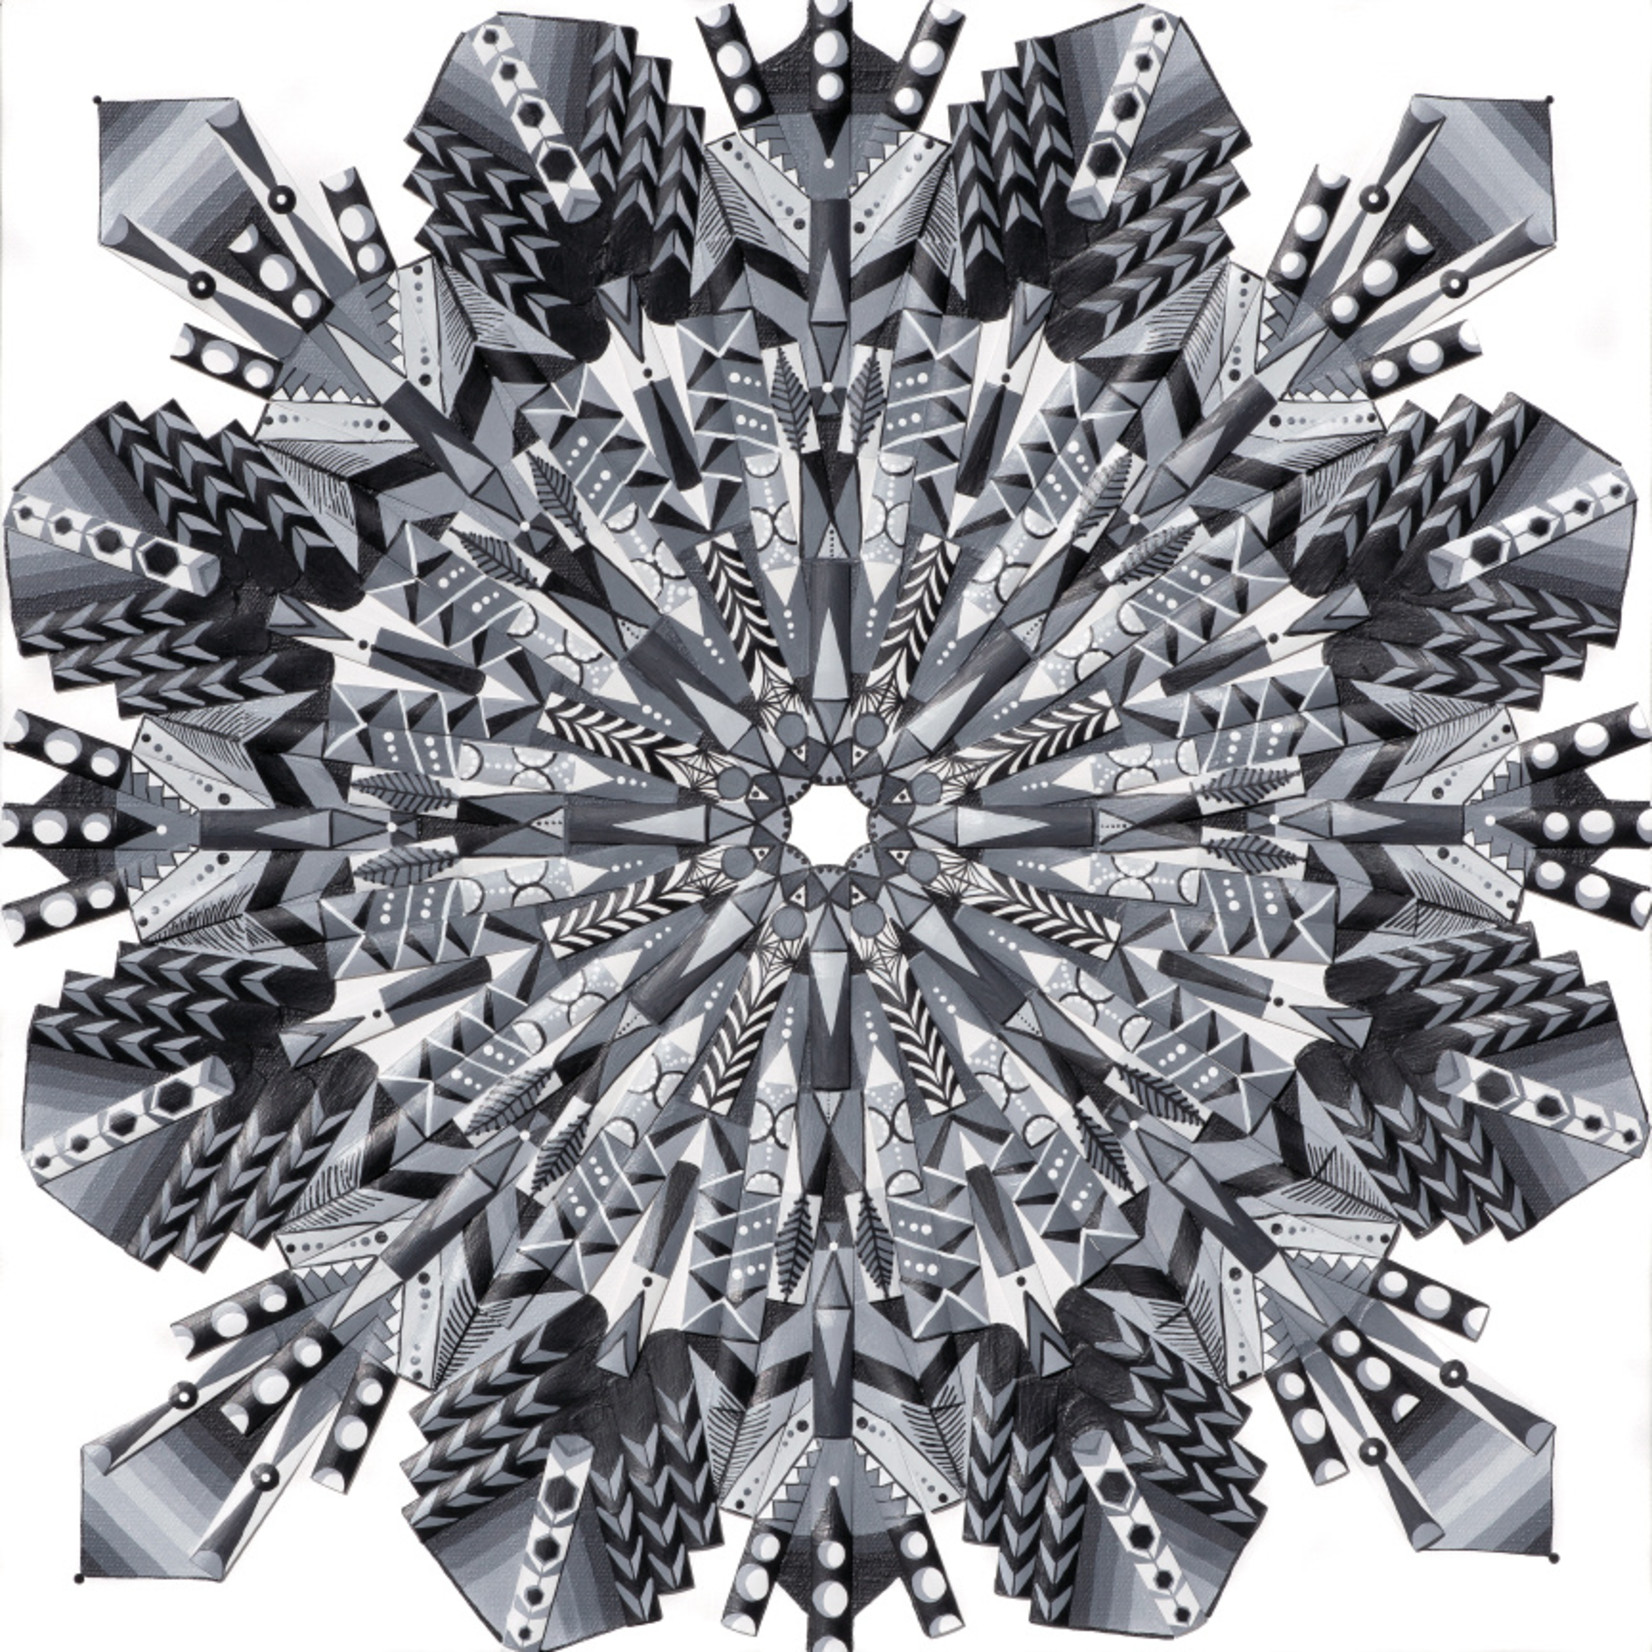 Stirling Studios "Black and White Snowflake" Mandala Canvas Print